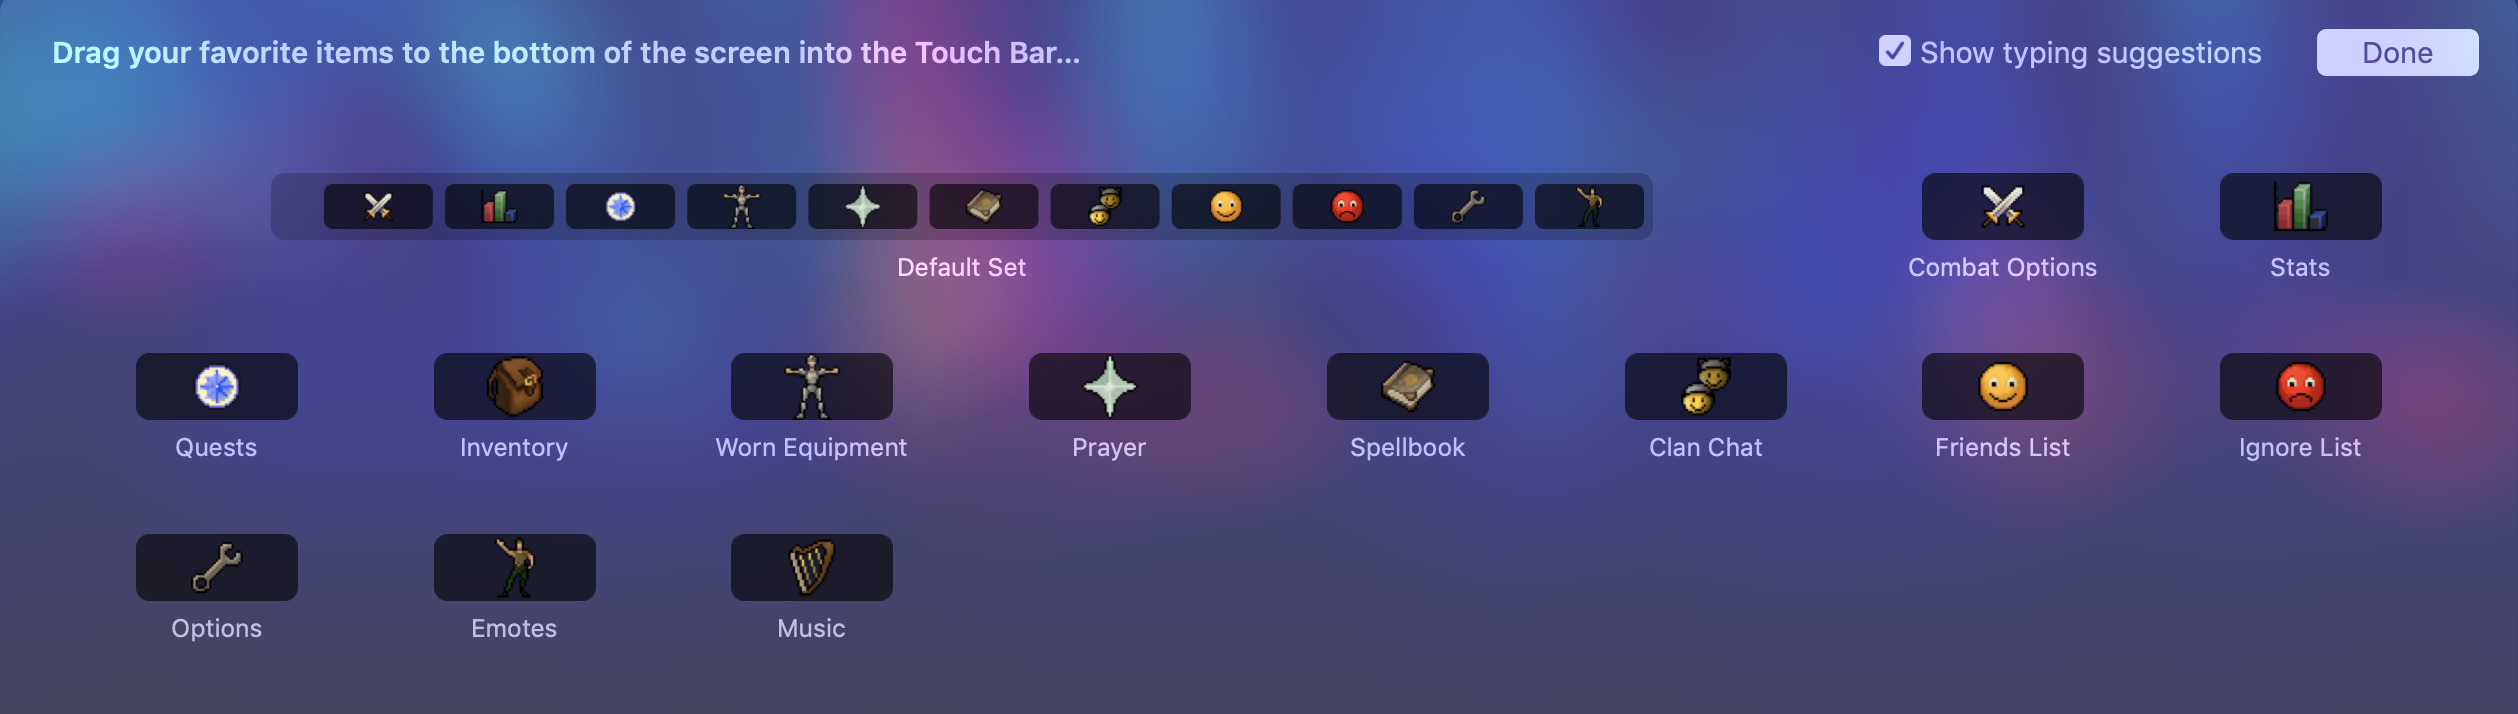 Touch bar customization UI screenshot